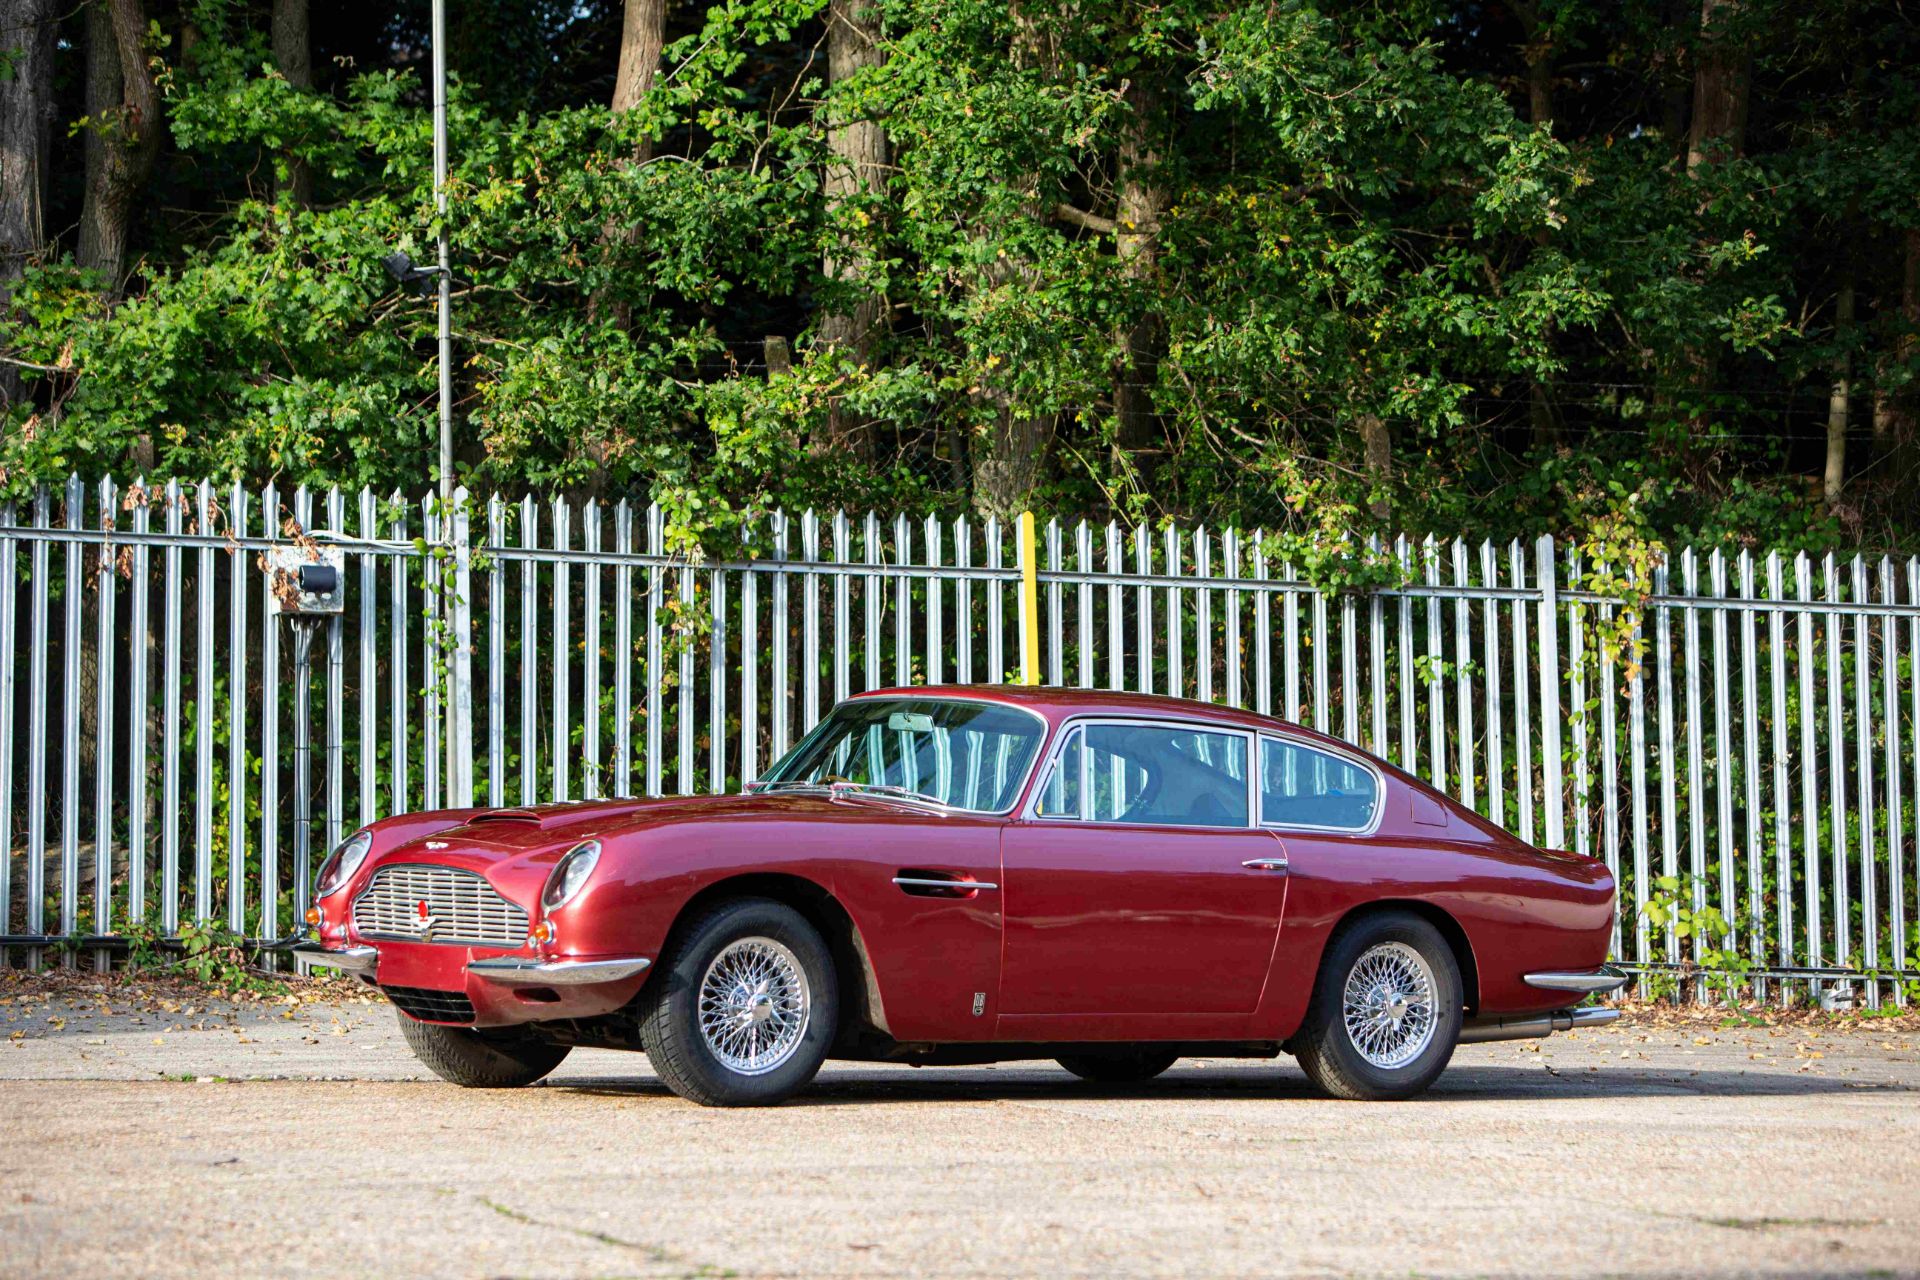 1967 Aston Martin DB6 Sports Saloon Chassis no. DB6/3225/R